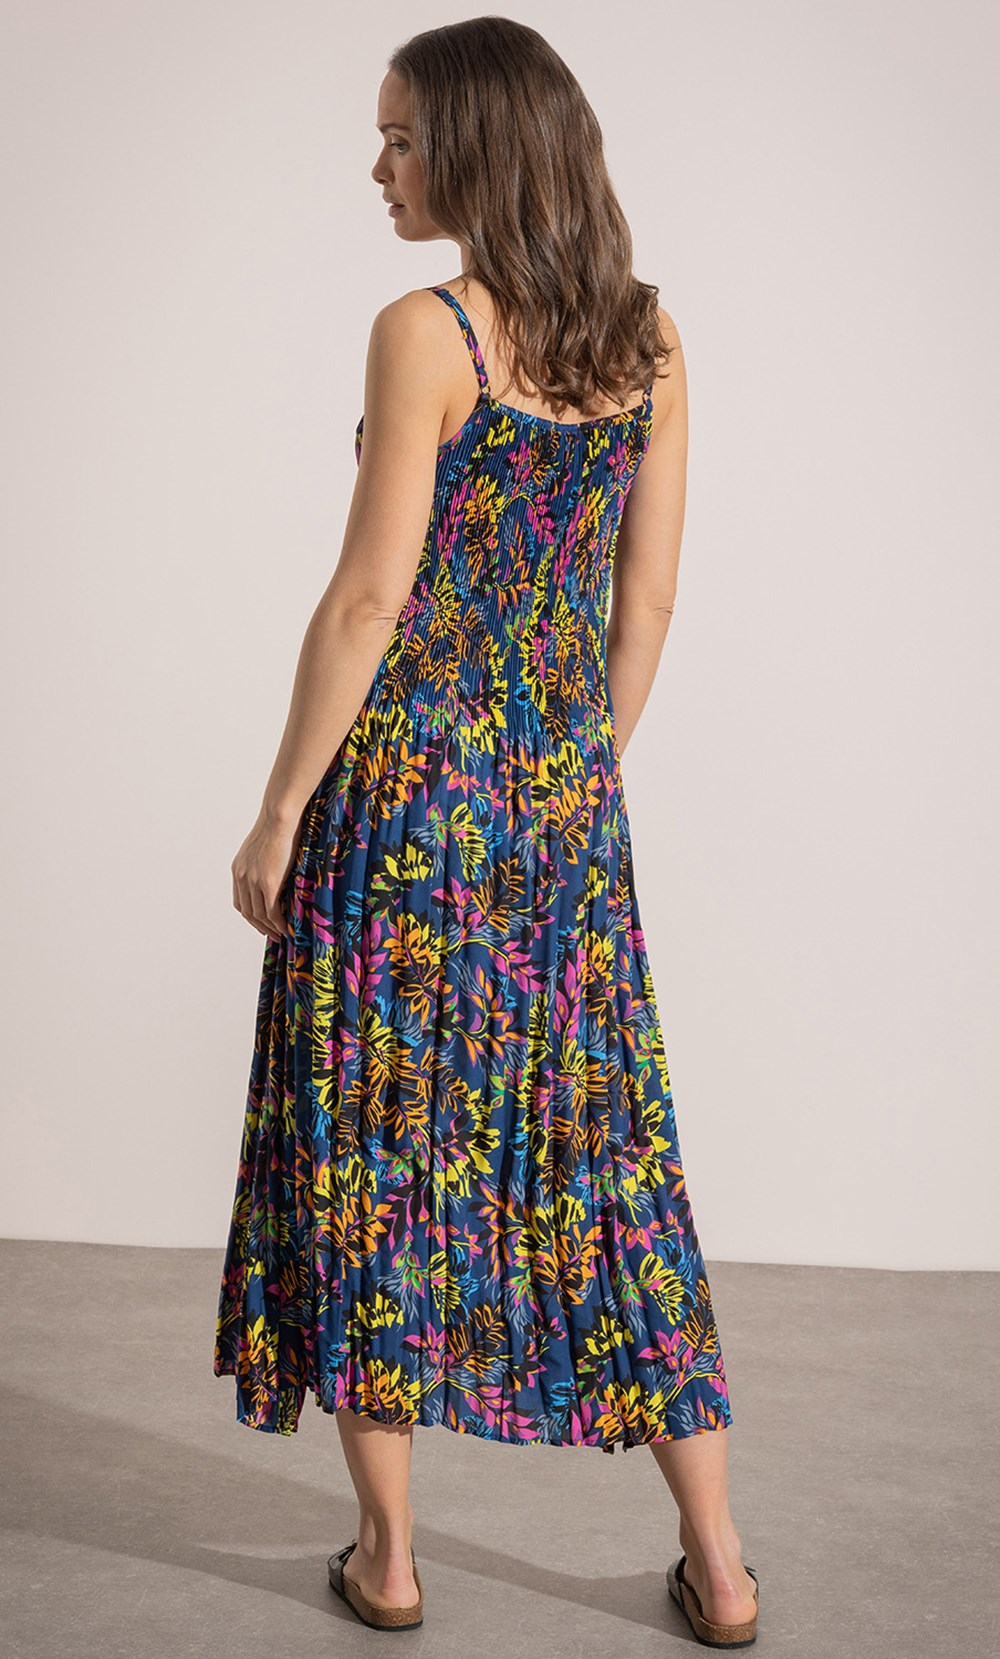 Floral Print Strappy Maxi Dress